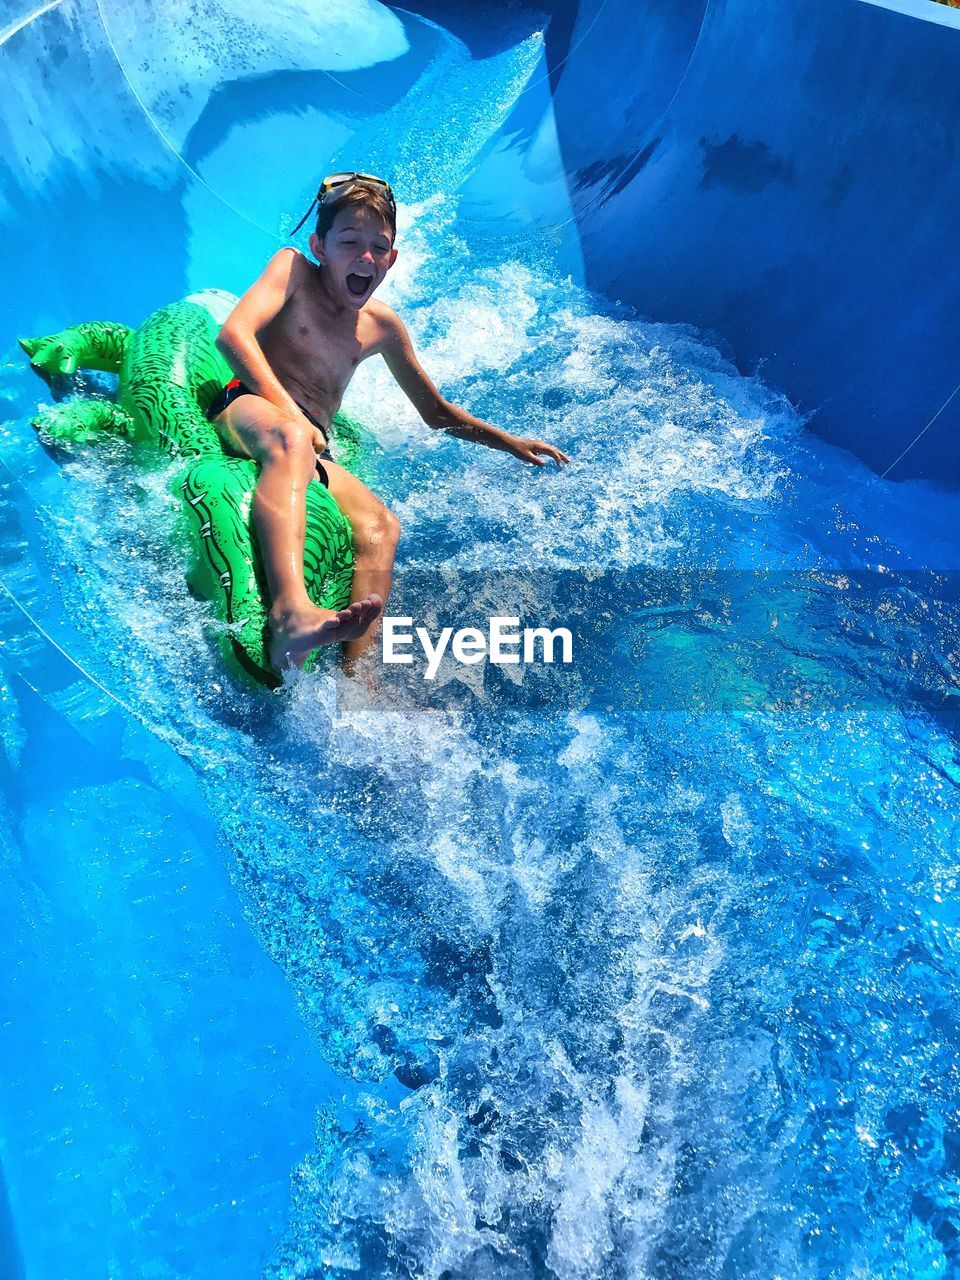 Playful boy sliding on water slide during sunny day